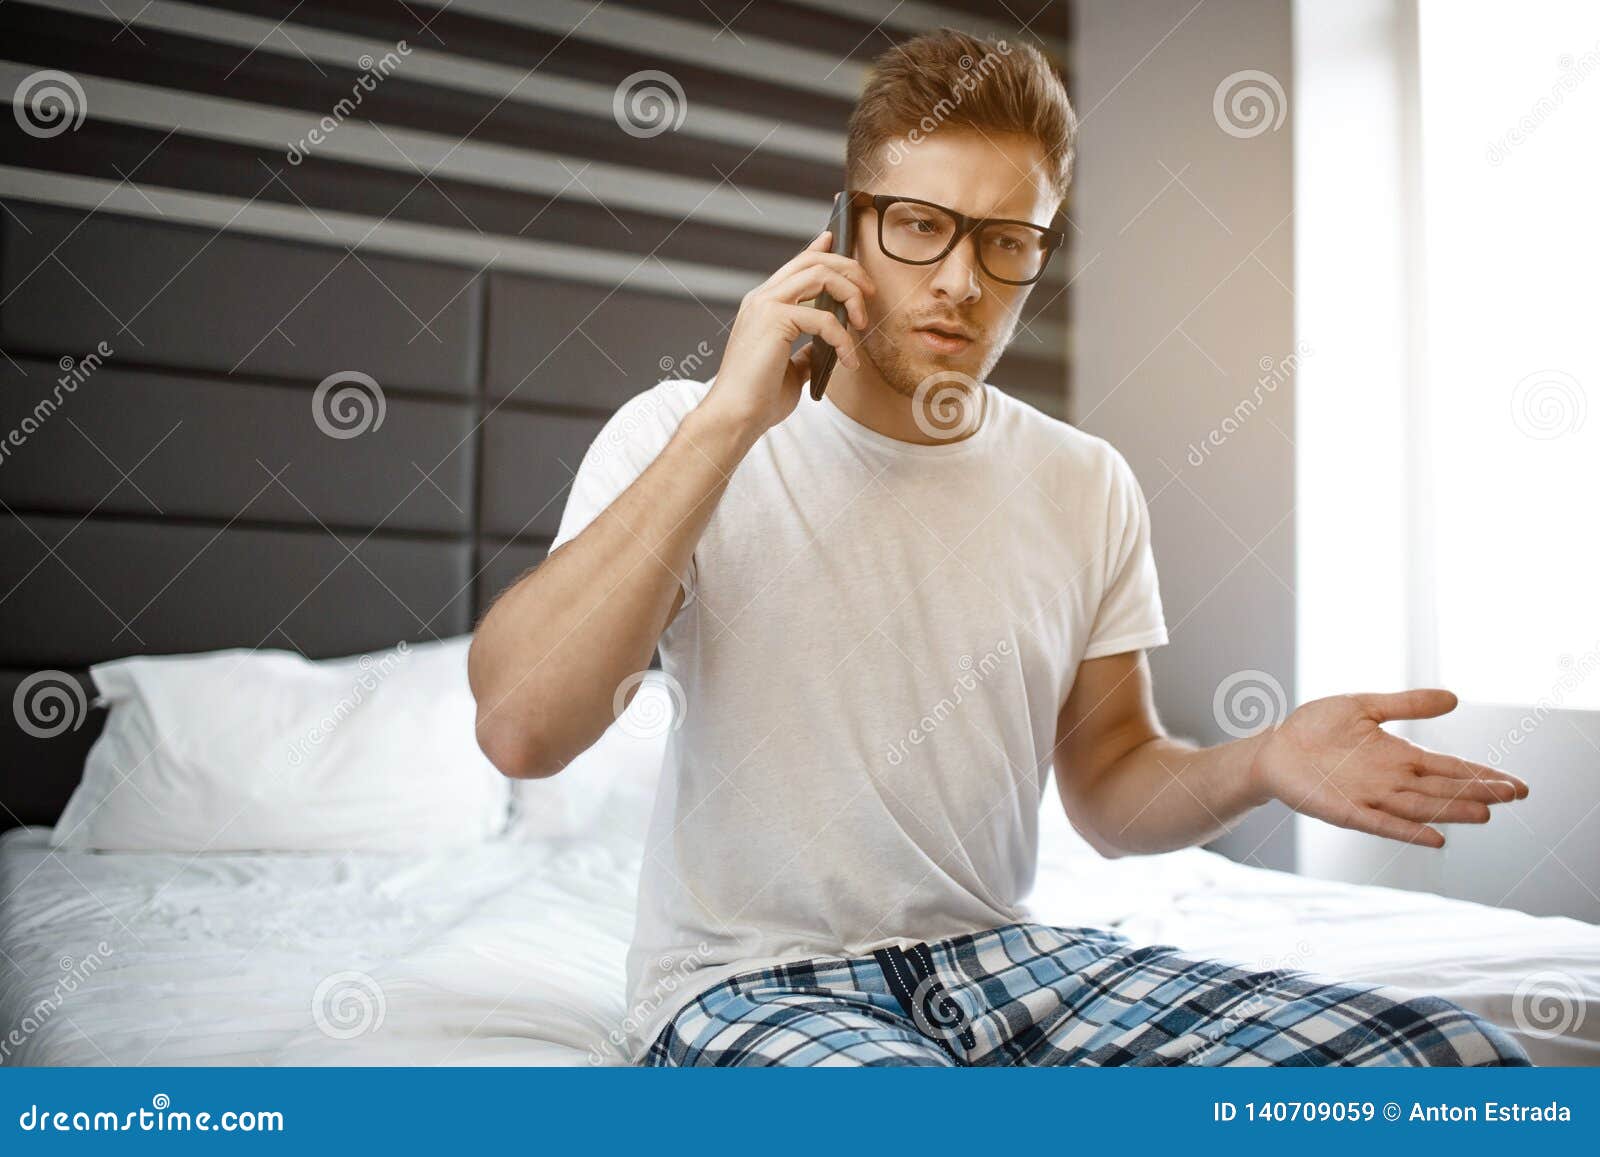 He talked. Парень разговаривает по телефону на кровати. Мужчина в кровати говорит по телефону. Человек на кровати сидит разговаривает по телефону. Парень говорит по телефону в кровати.